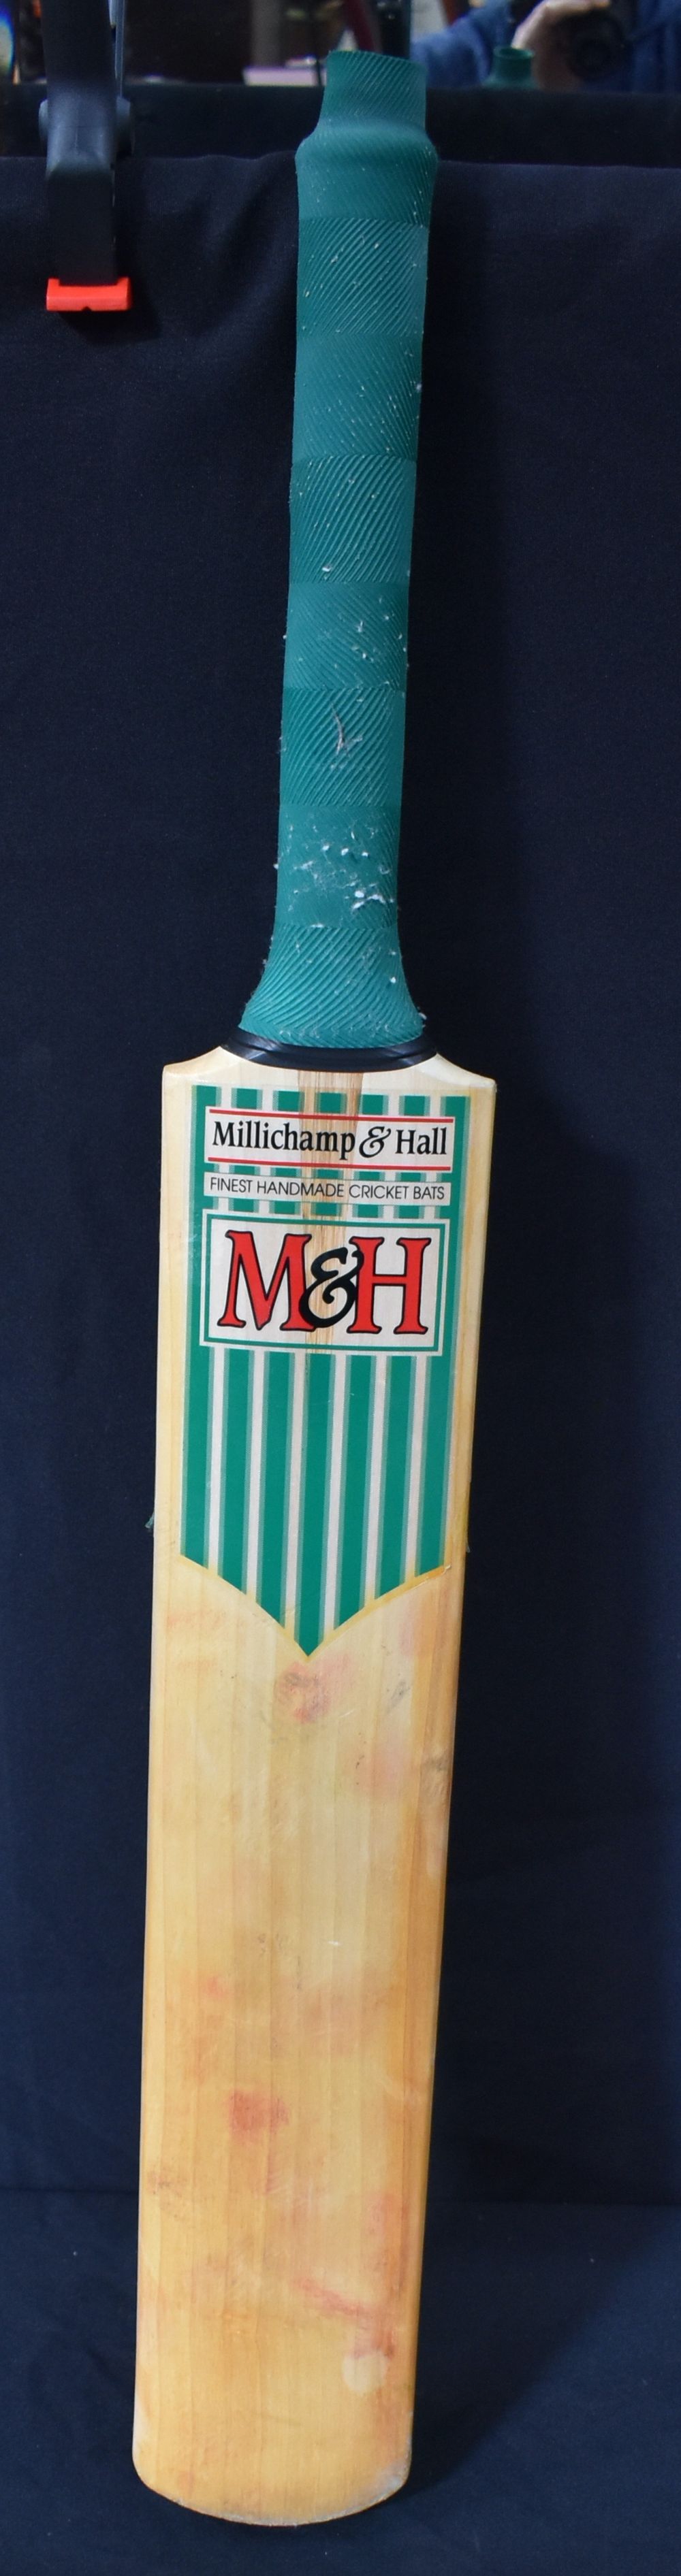 A Millichamp & Hall Adult size Cricket bat 84 cm.